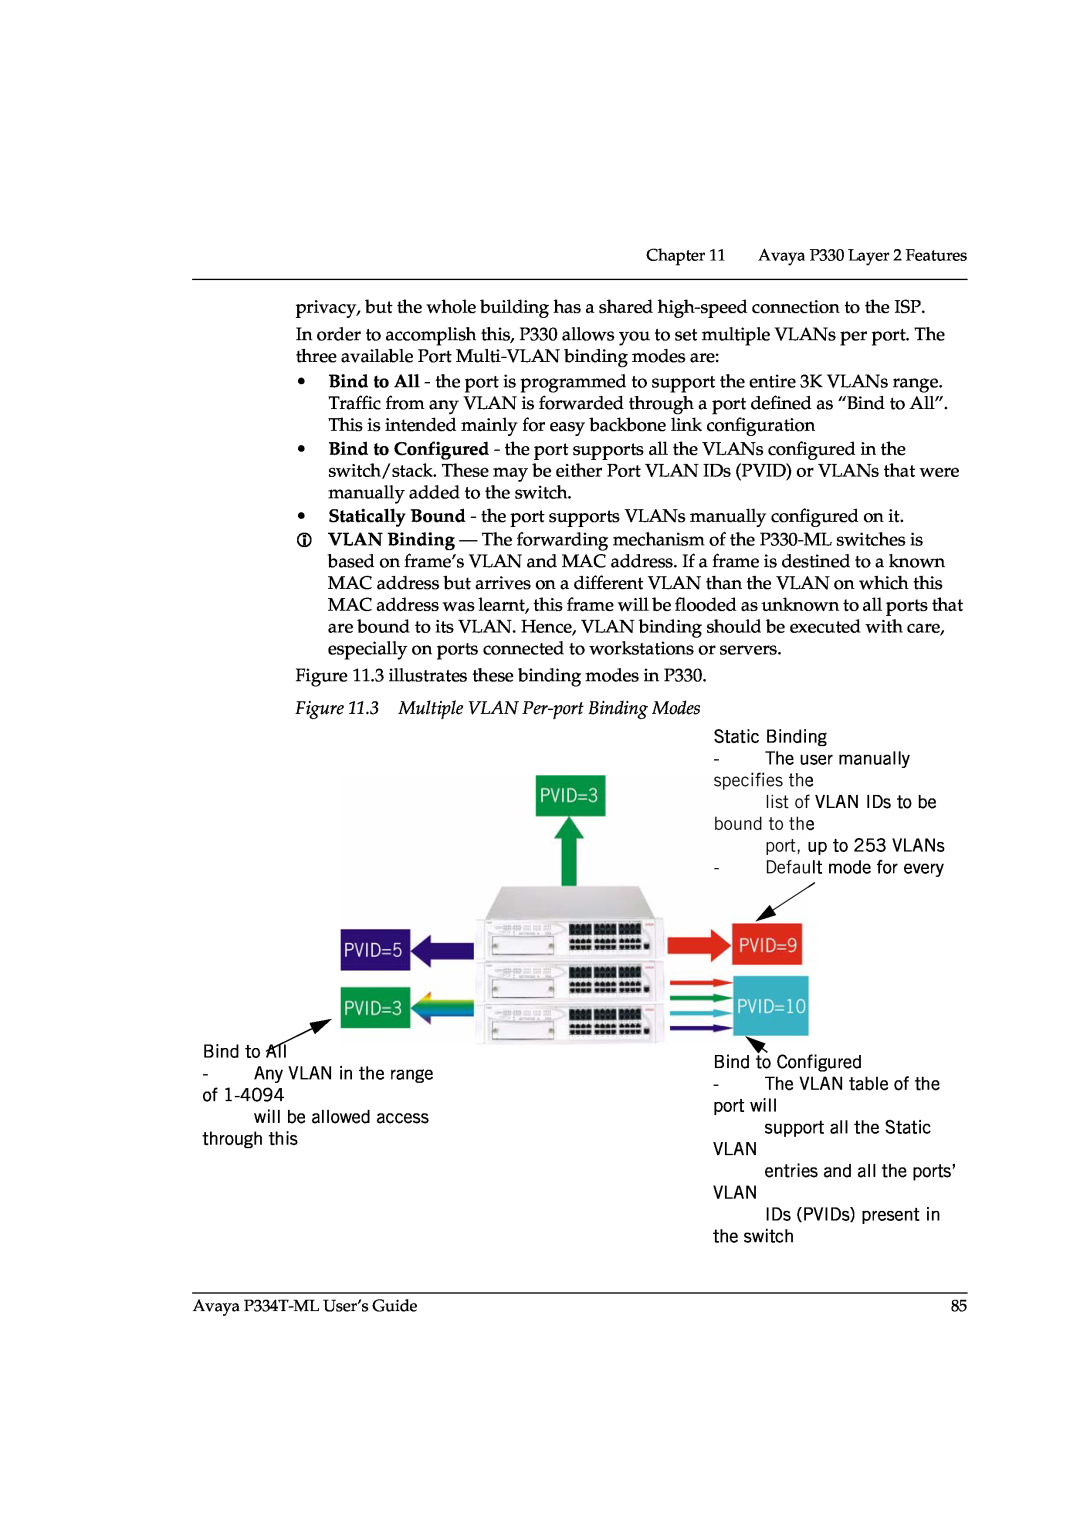 Avaya P3343T-ML manual 3 illustrates these binding modes in P330 